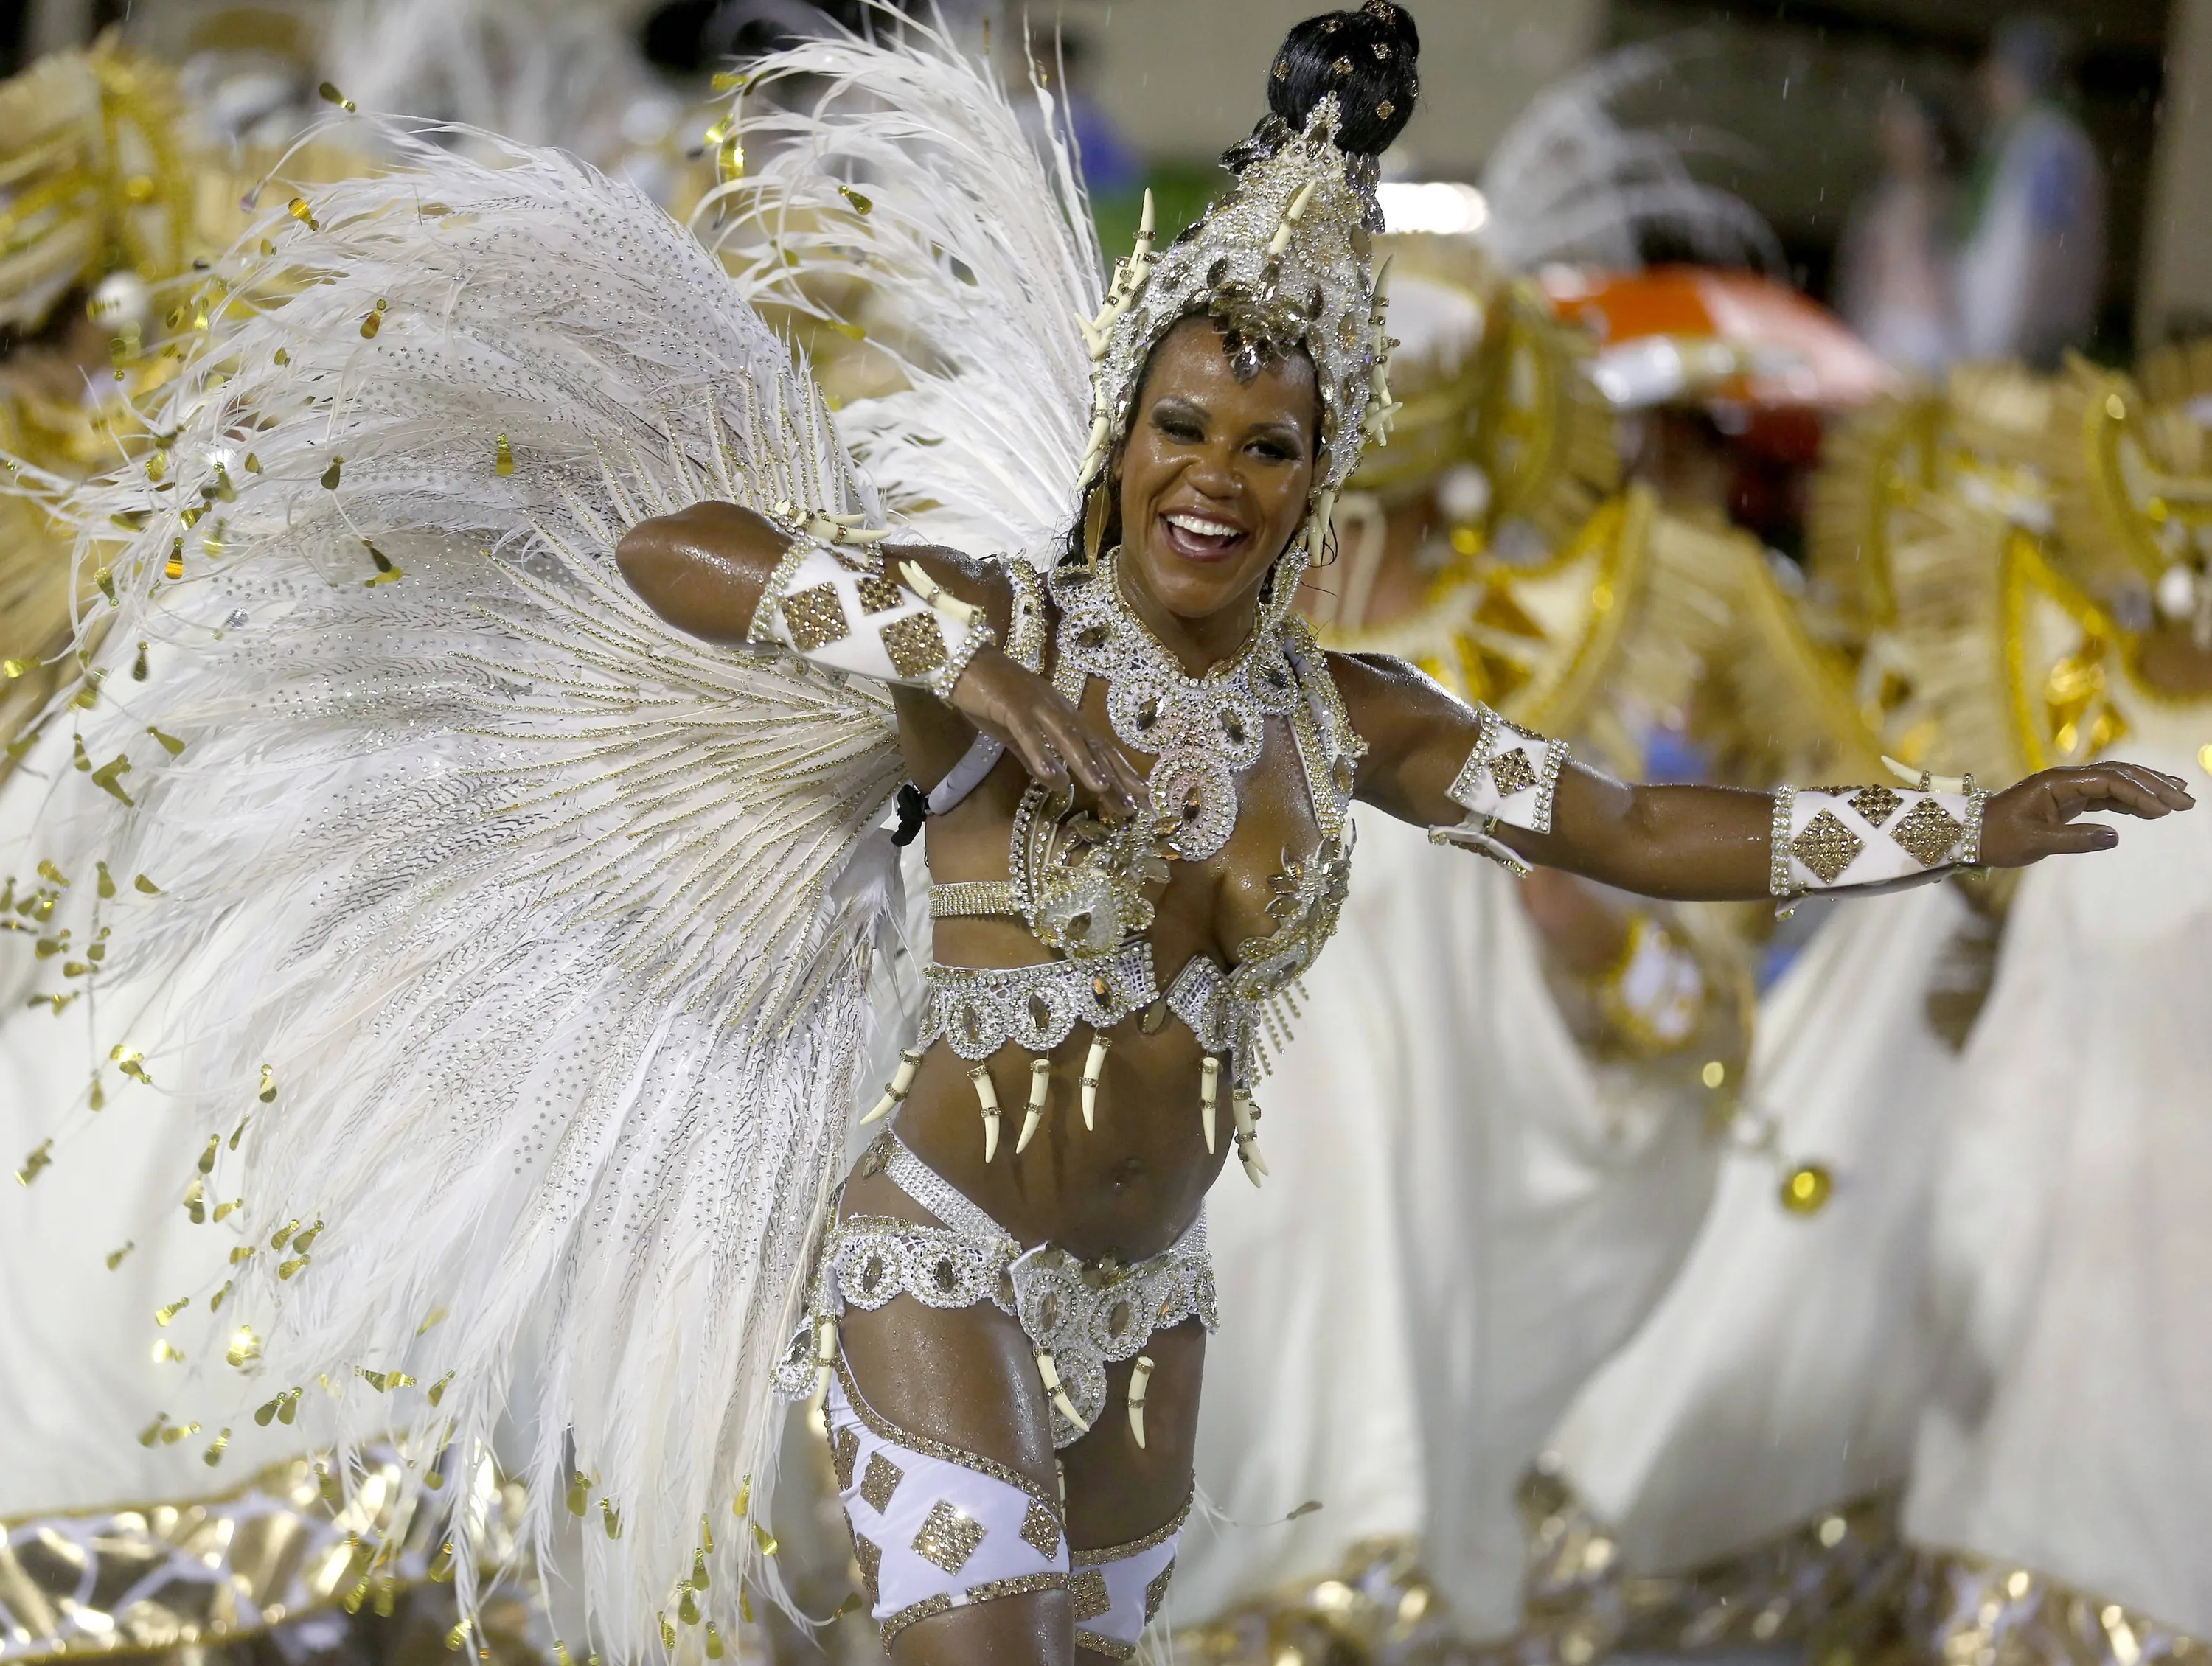 Rio rio brazilian. Карнавал в Рио-де-Жанейро. Бразильский карнавал в Рио-де-Жанейро Самба. Самба карнавал в Бразилии. Карнавал Рио (Rio Carnival).